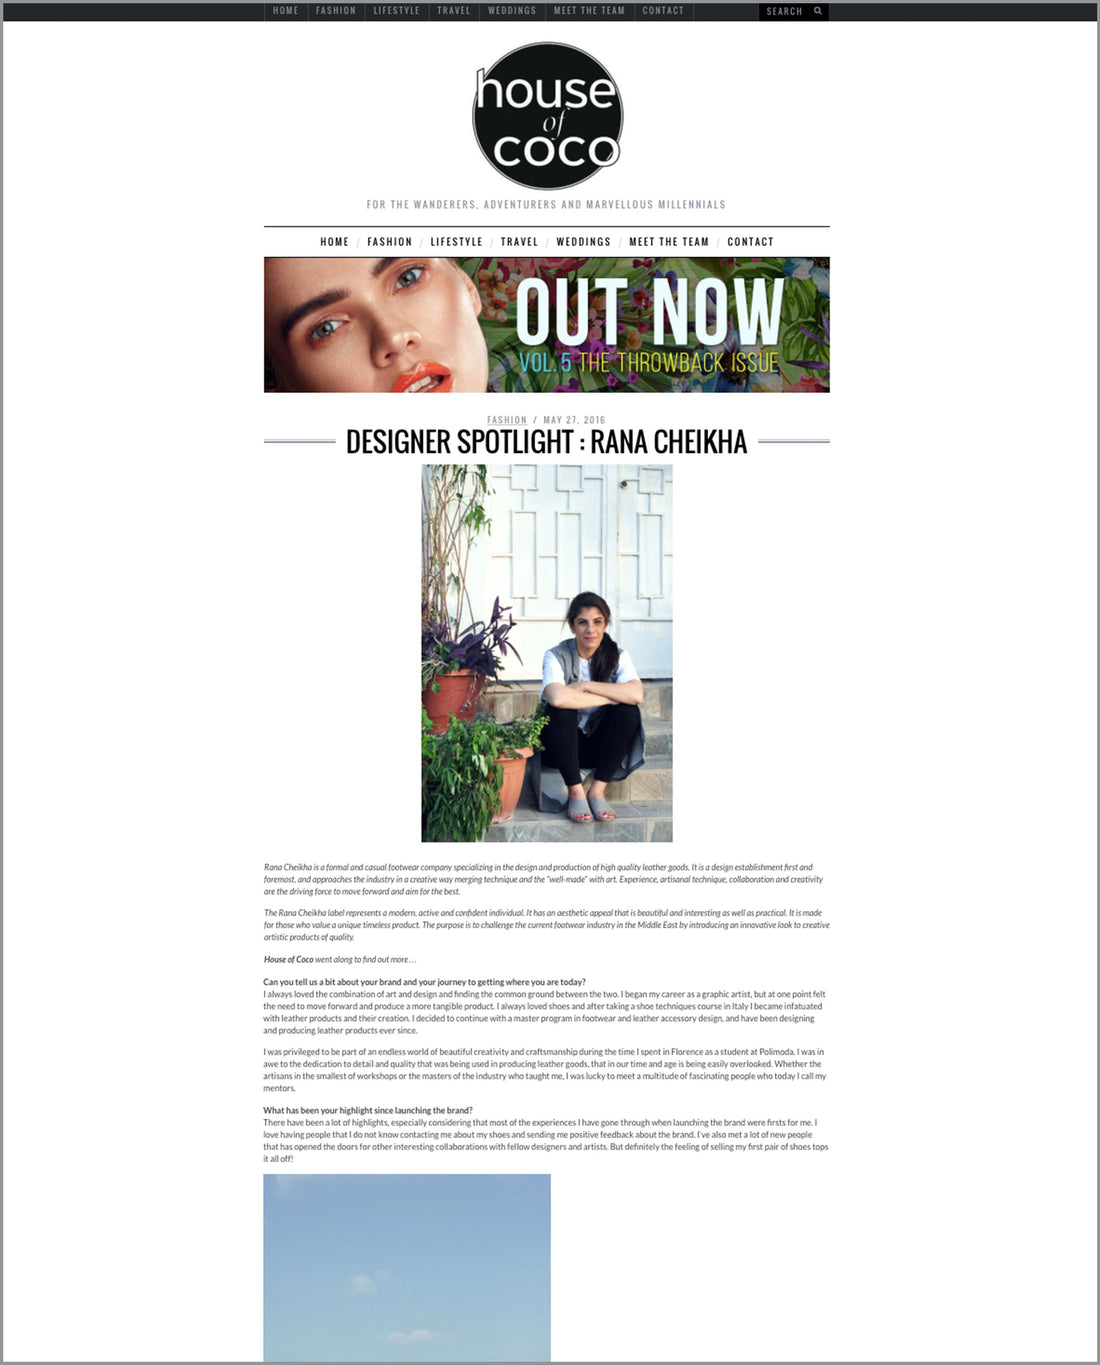 House of Coco Magazine ranacheikha